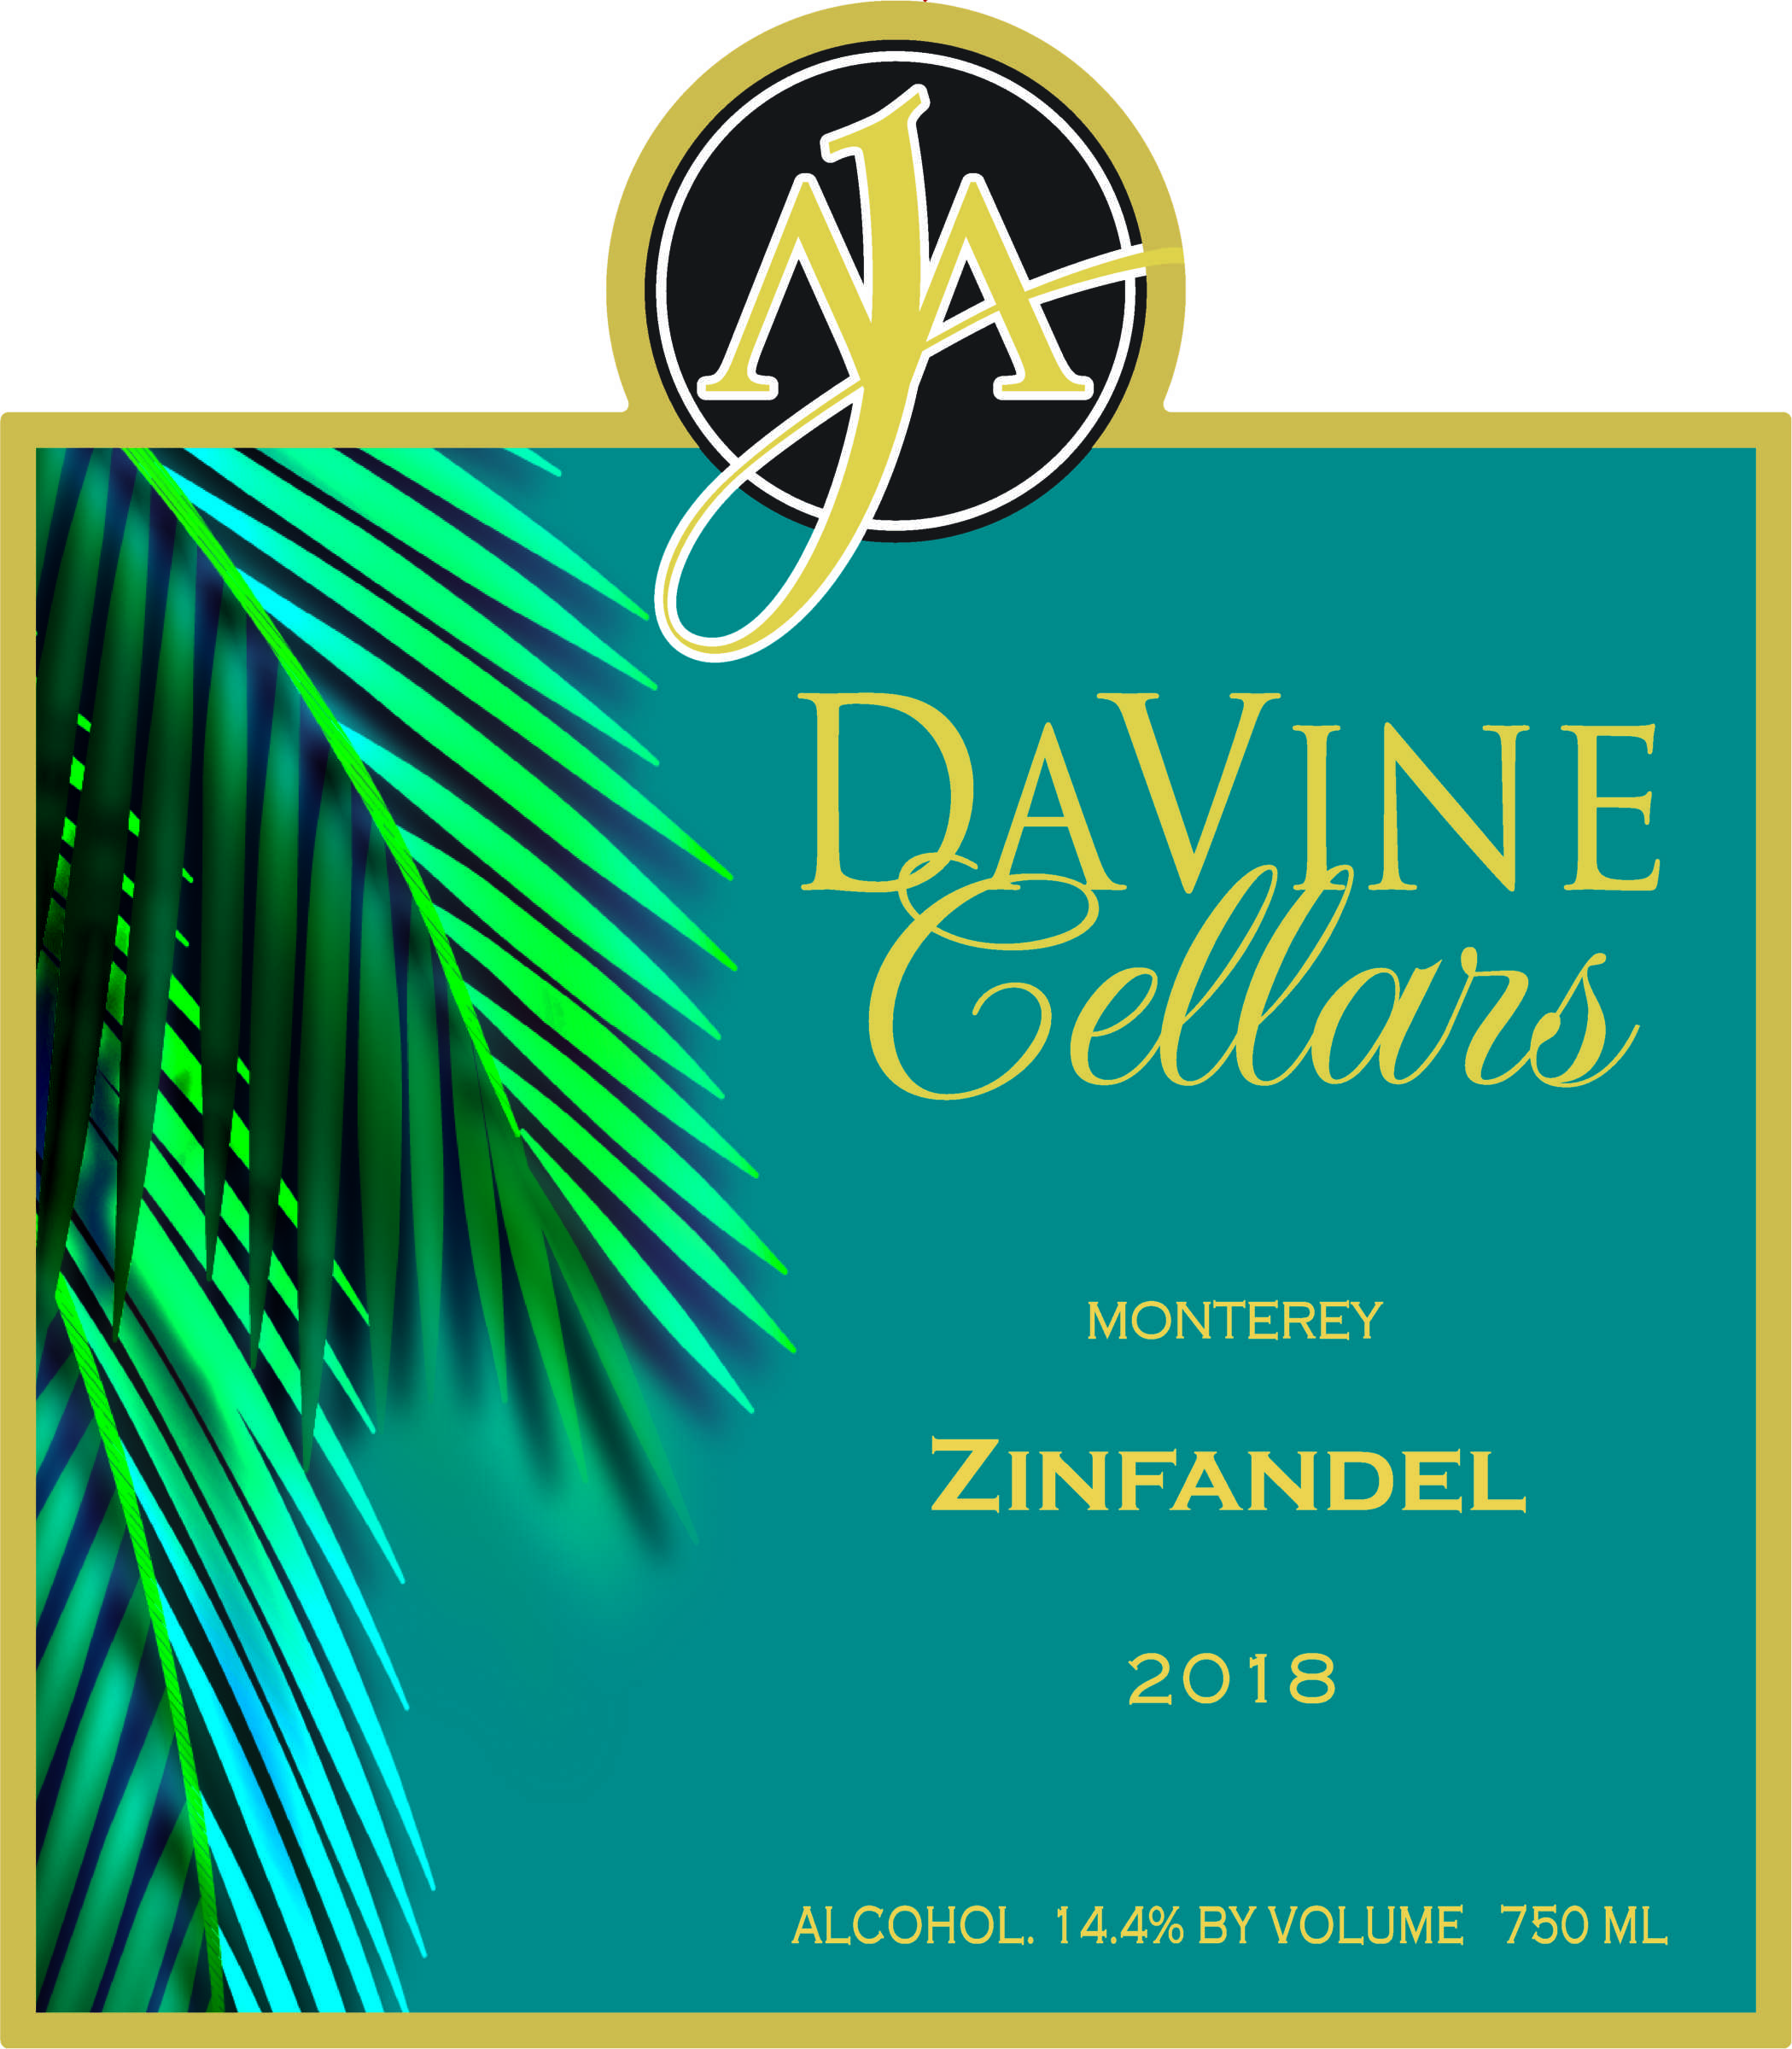 Product Image for 2018 Monterey Zinfandel "First Base"